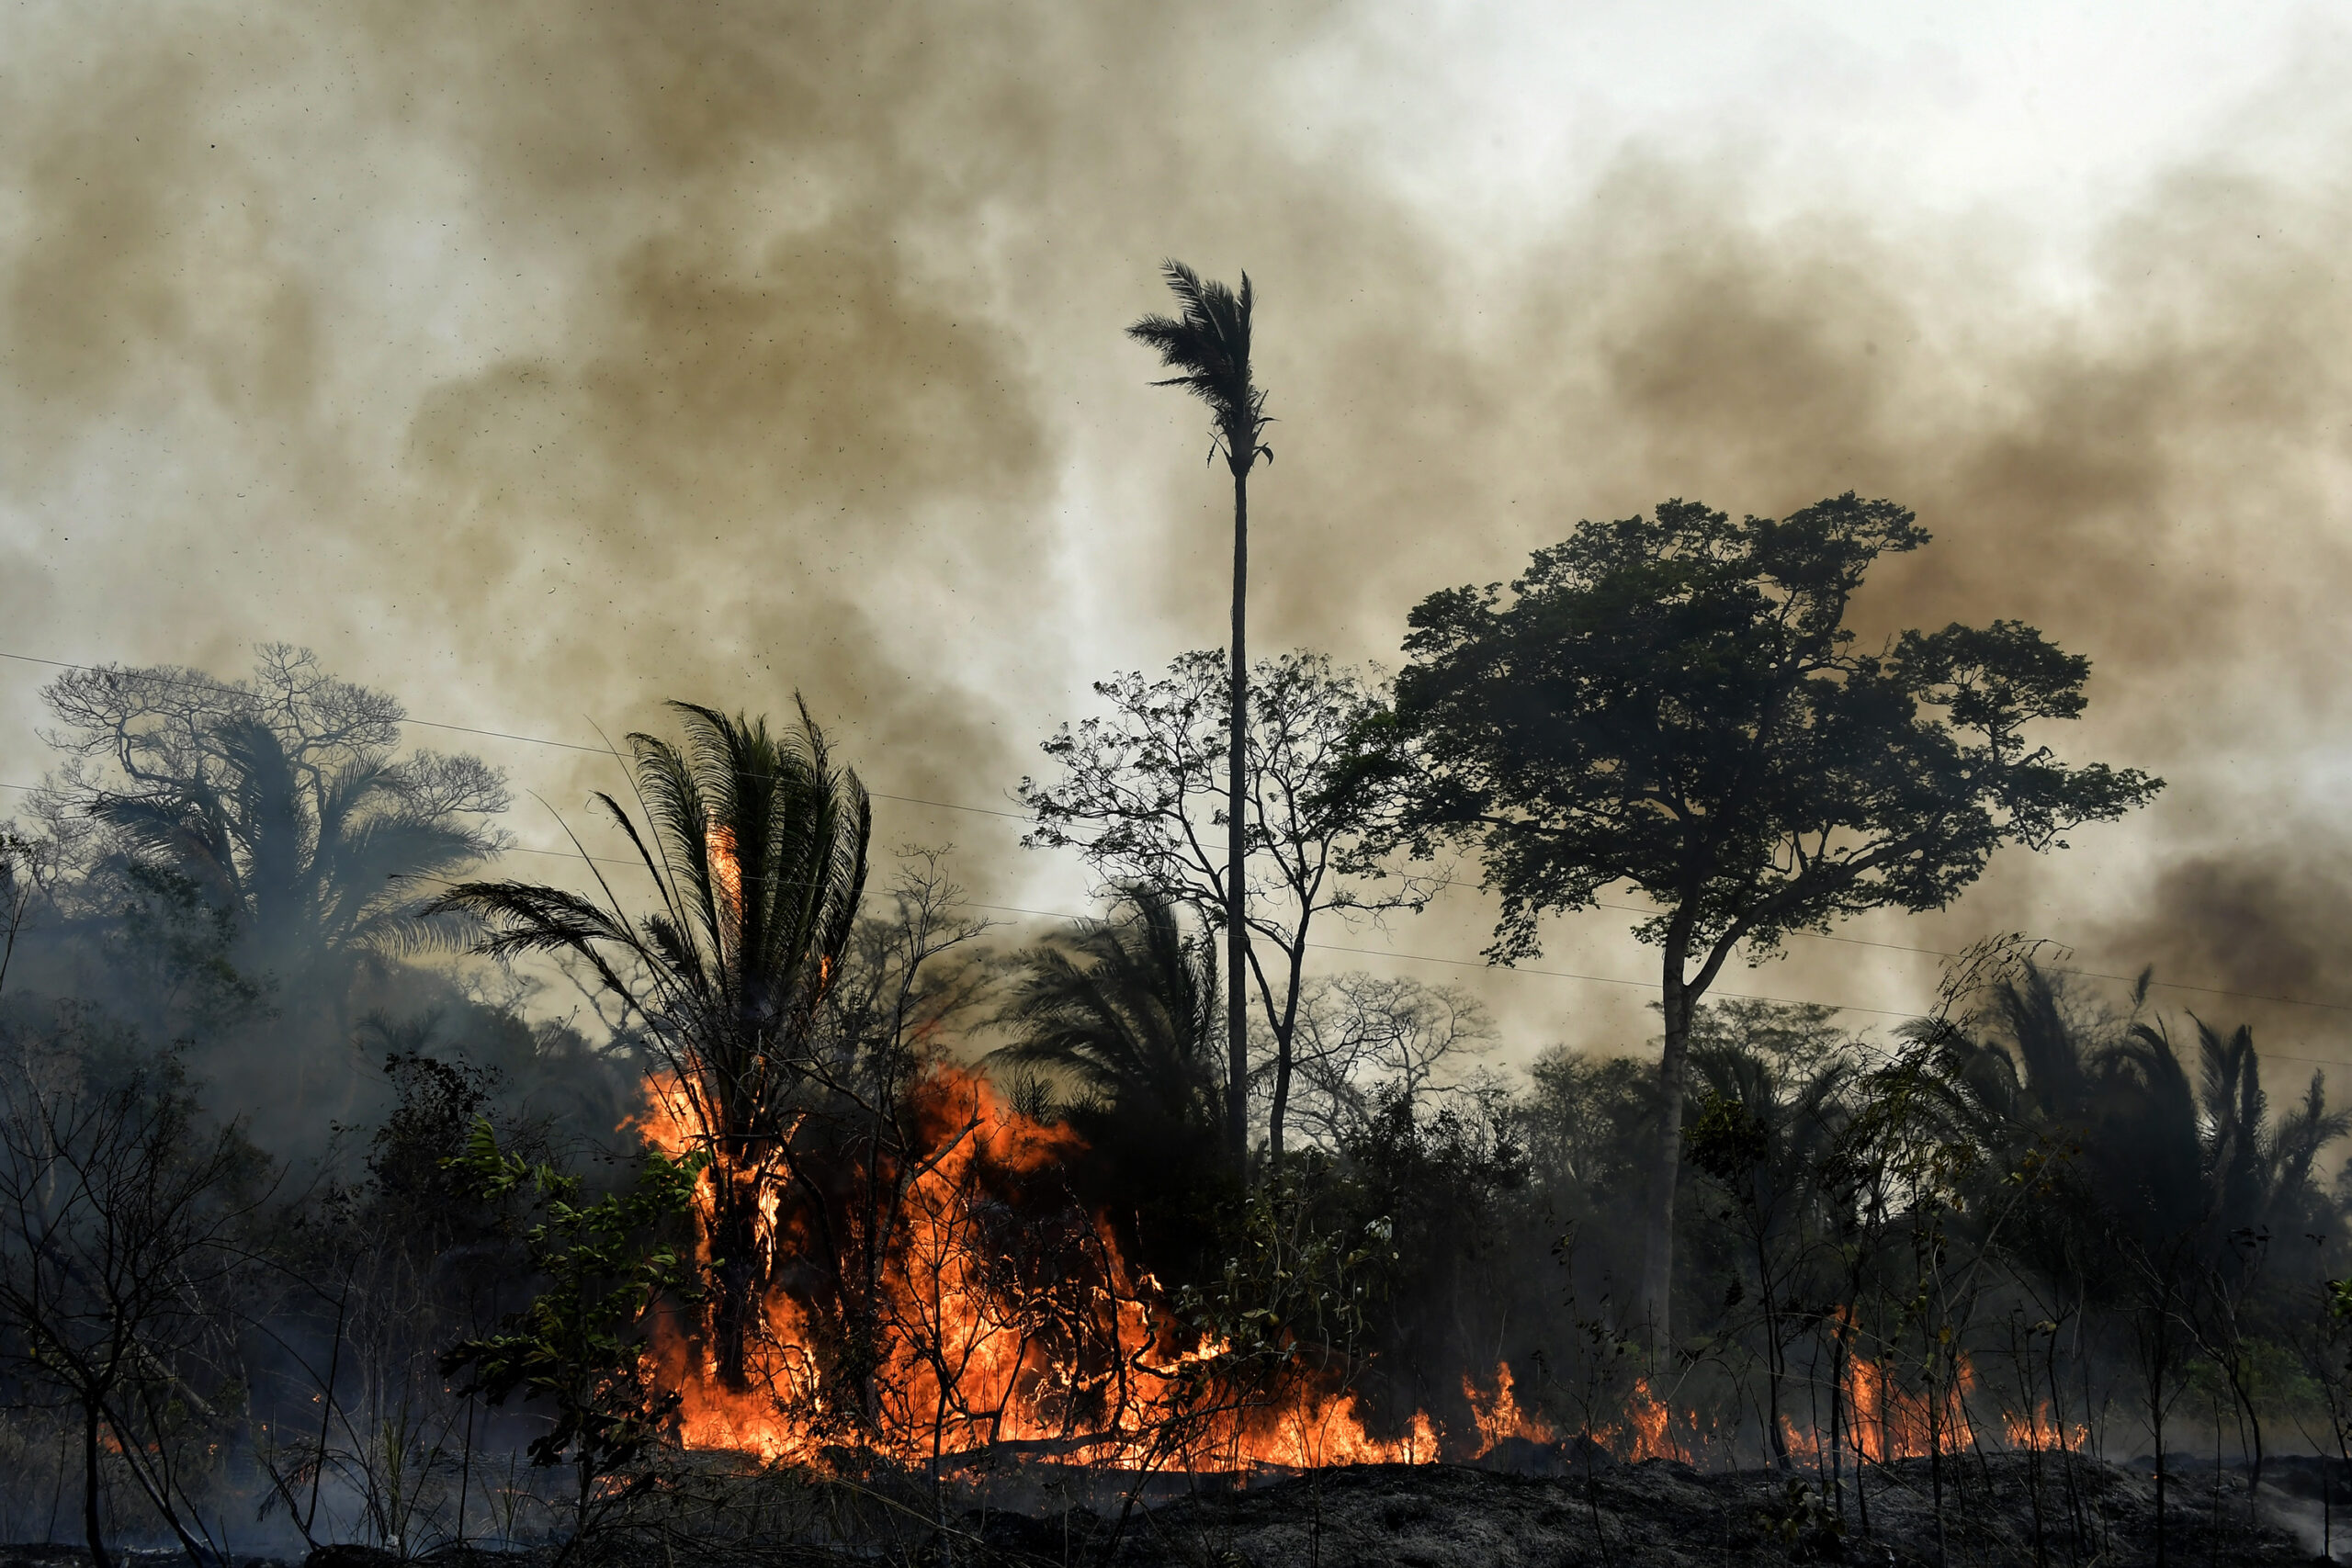 Wildfires burn through forest in Bolivia emitting large amounts of smoke.